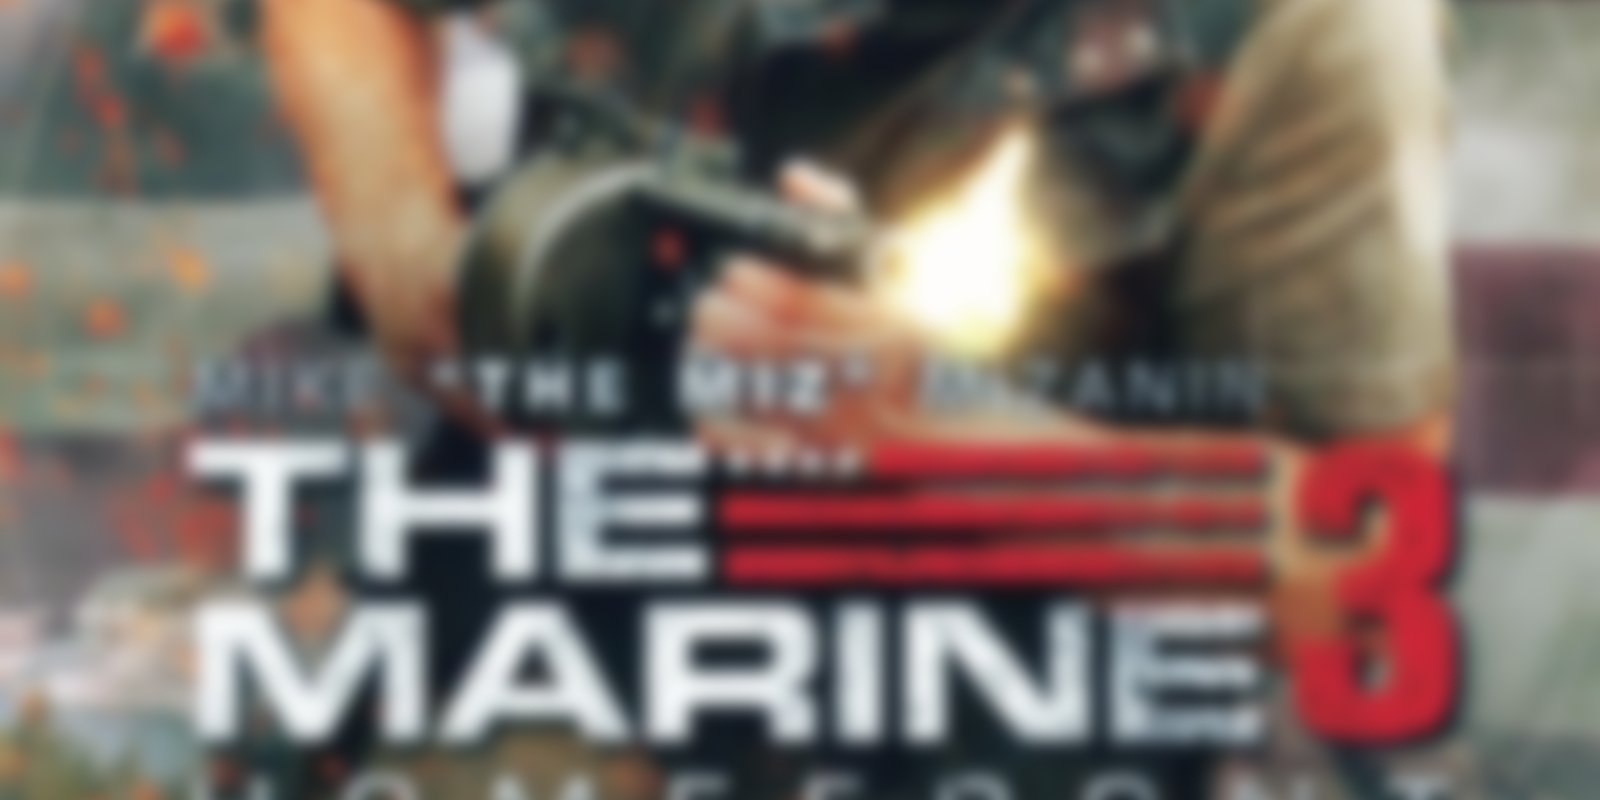 The Marine 3